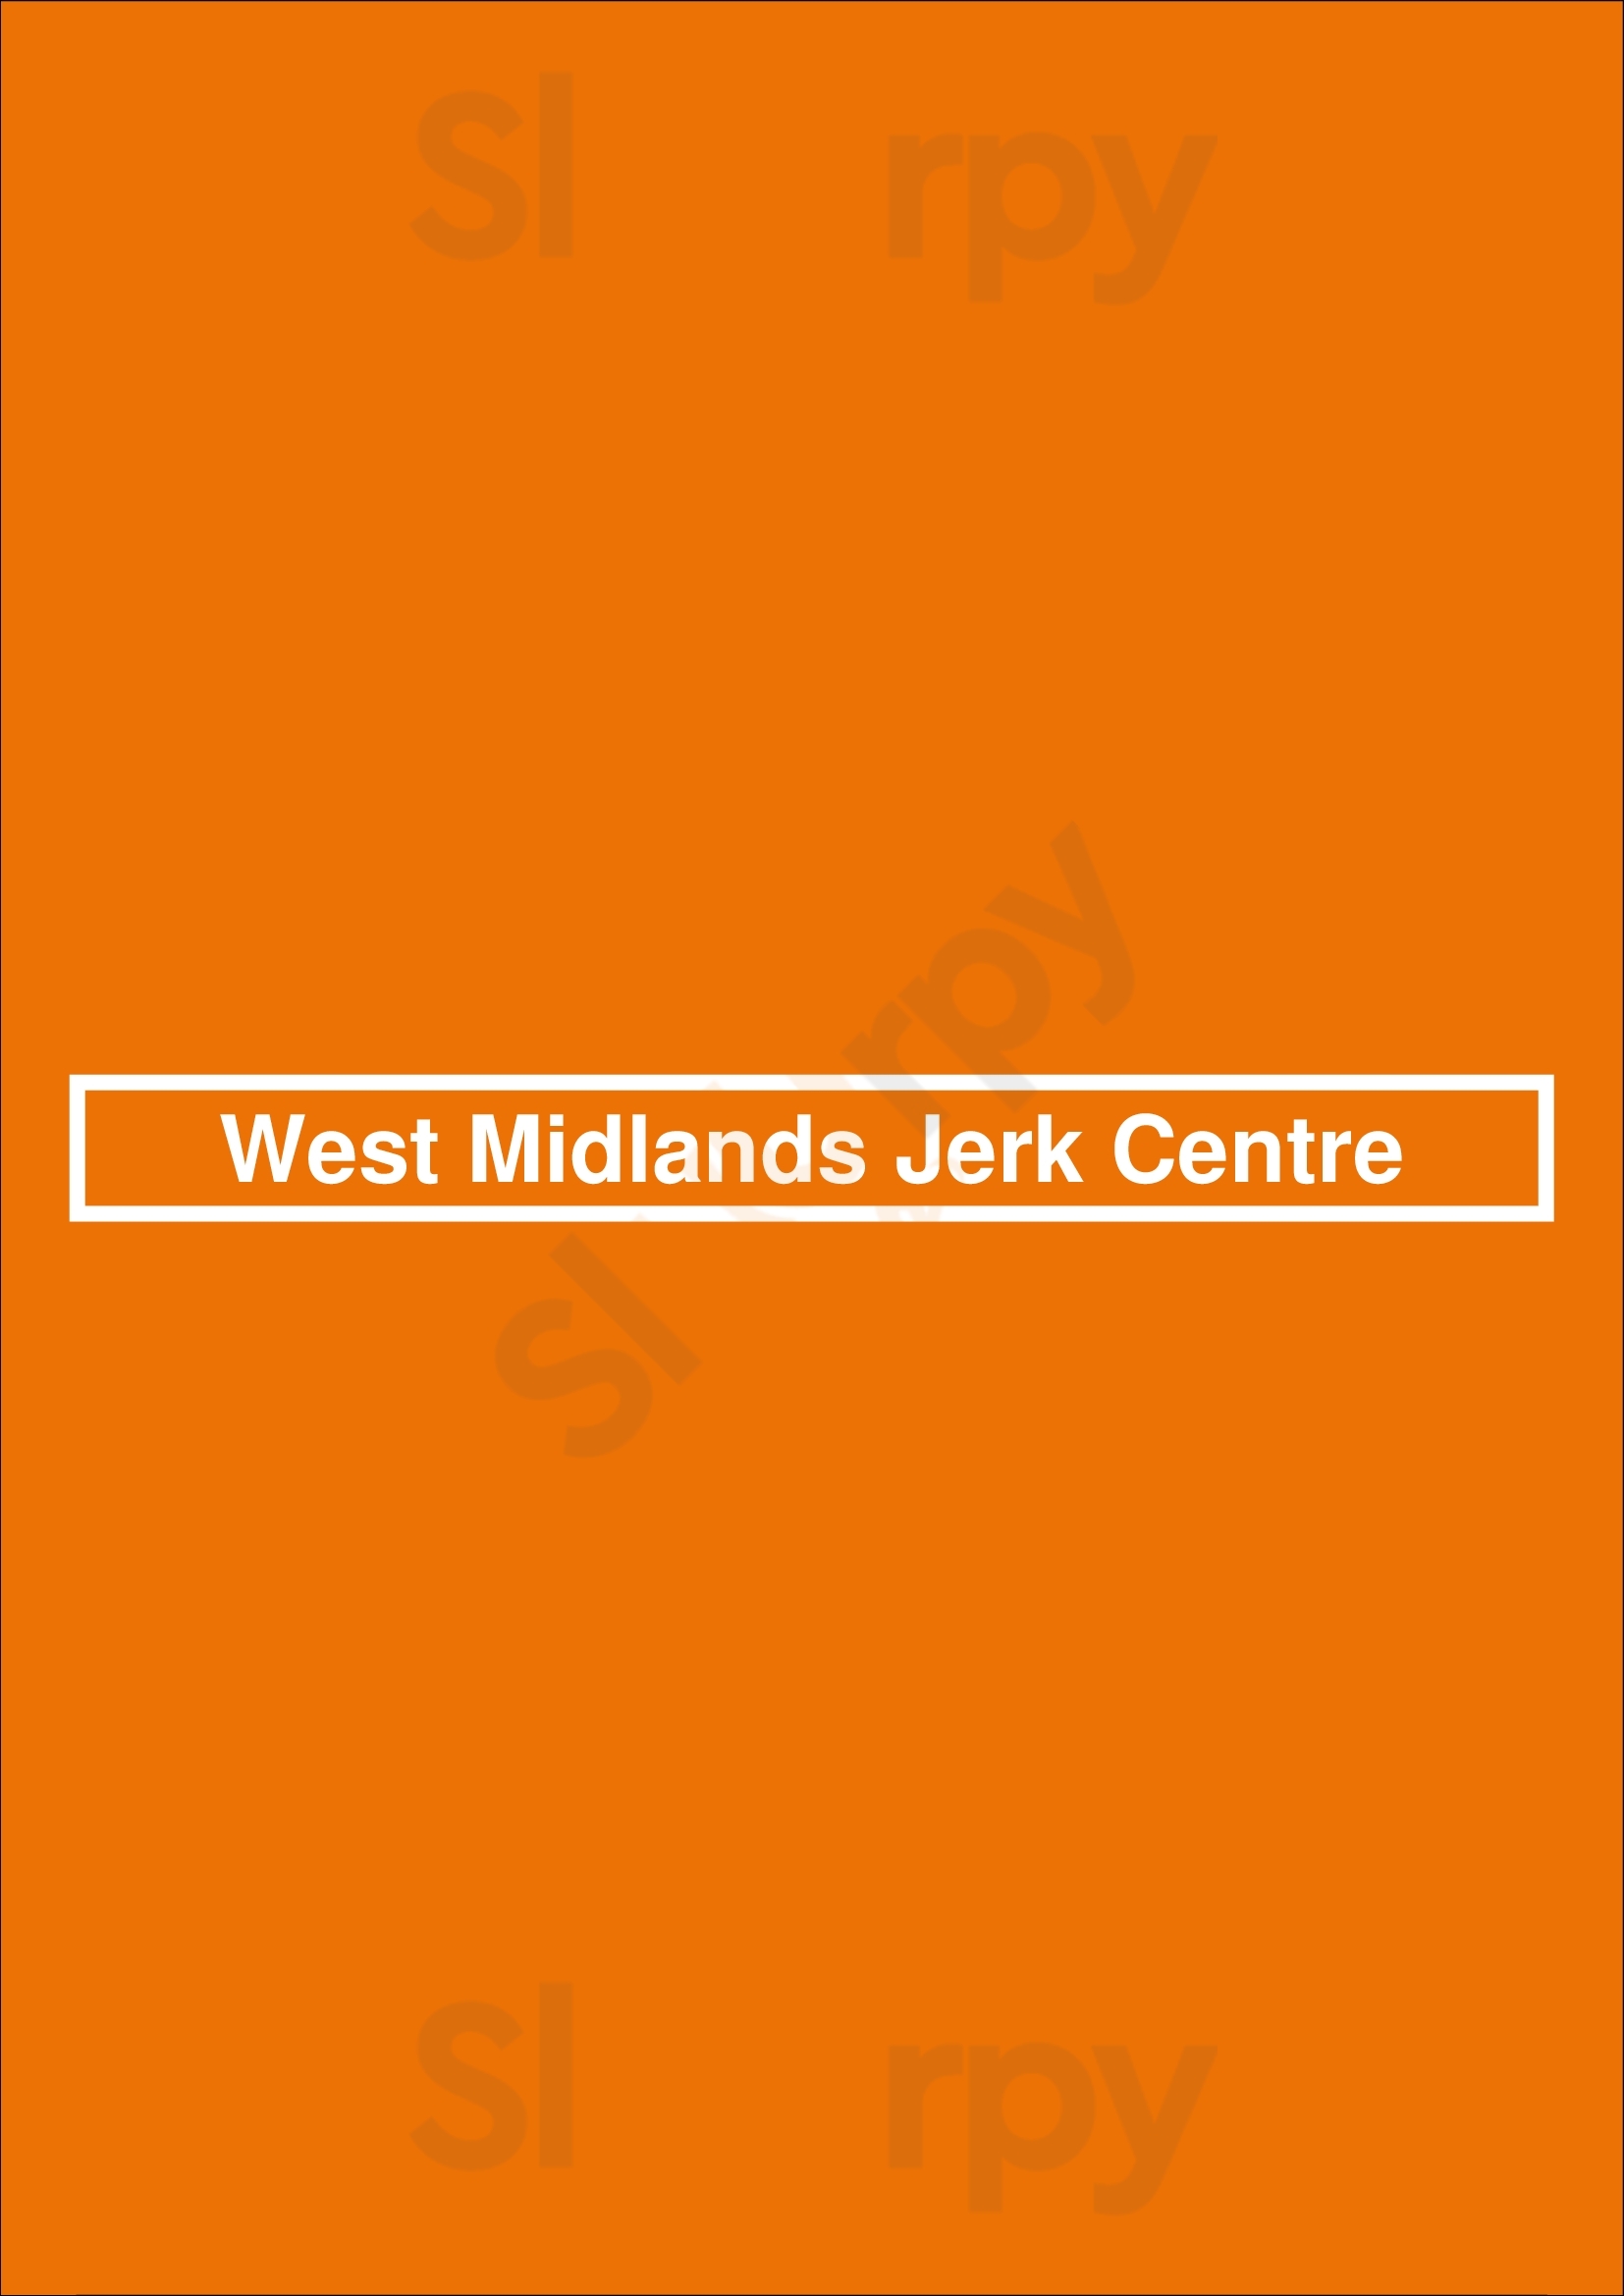 West Midlands Jerk Centre Birmingham Menu - 1